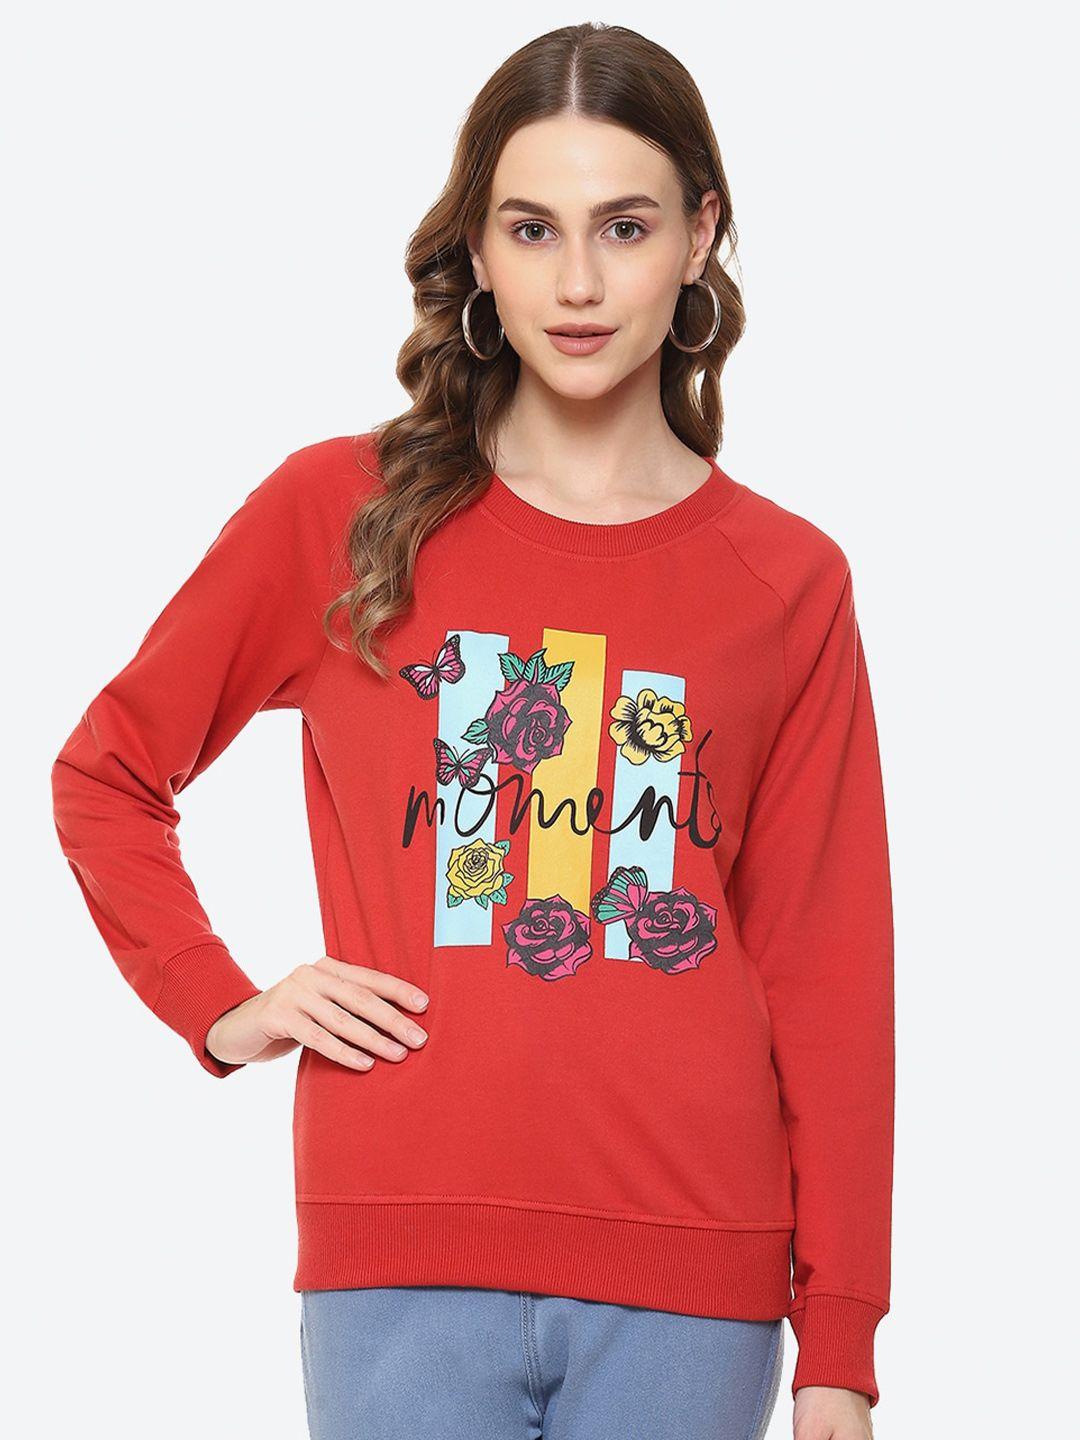 2bme graphic printed cotton pullover sweatshirt